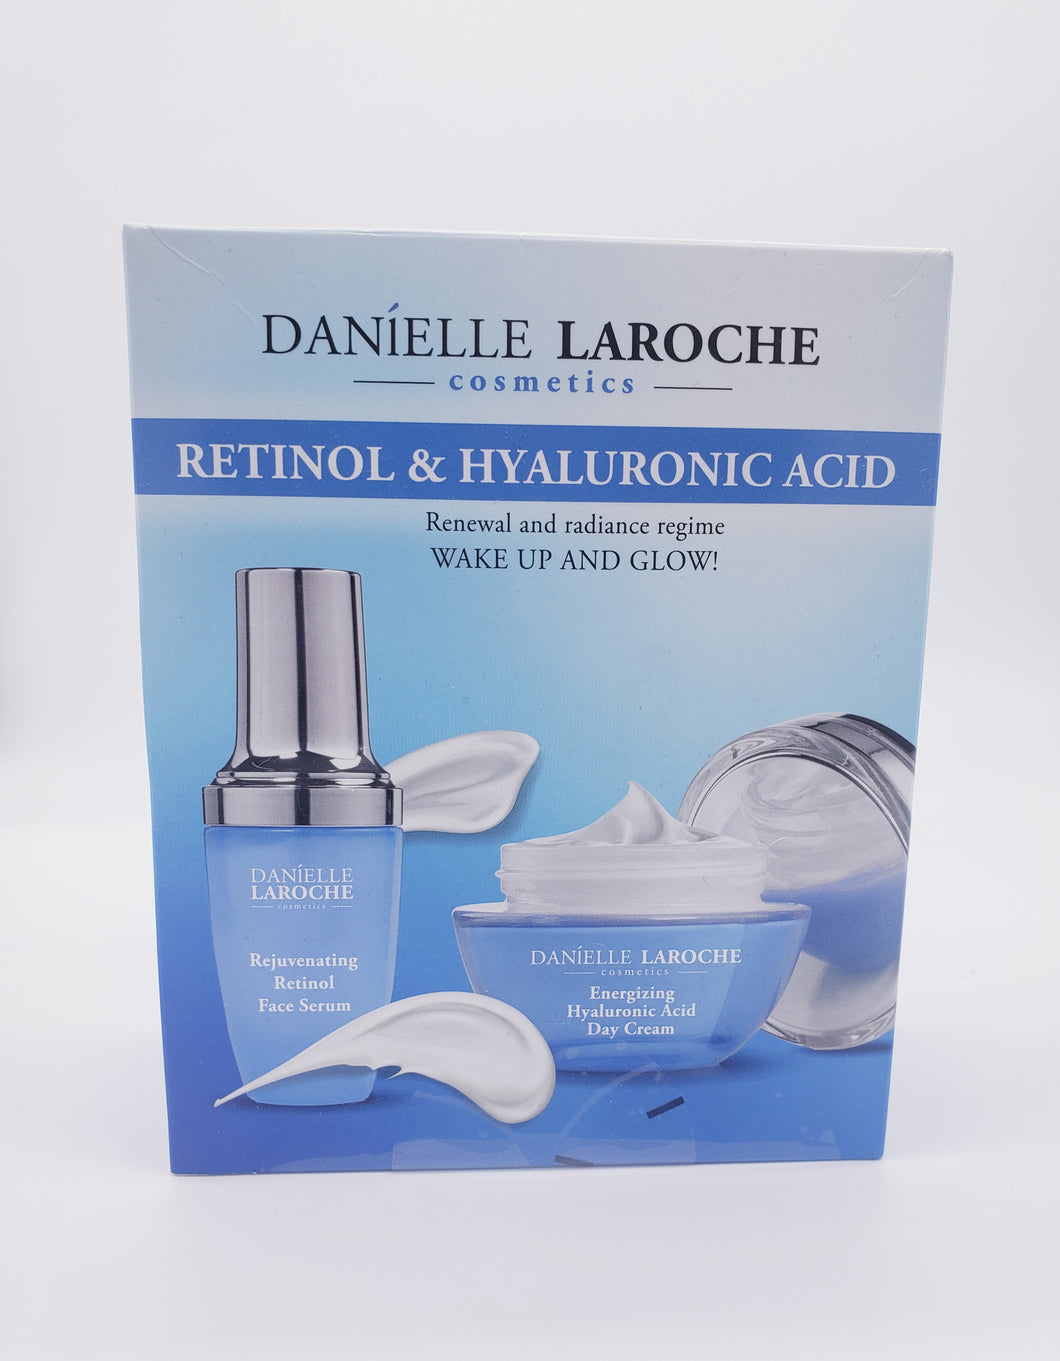 Danielle Laroche Retinol & Hyaluronic Acid Combo skincare